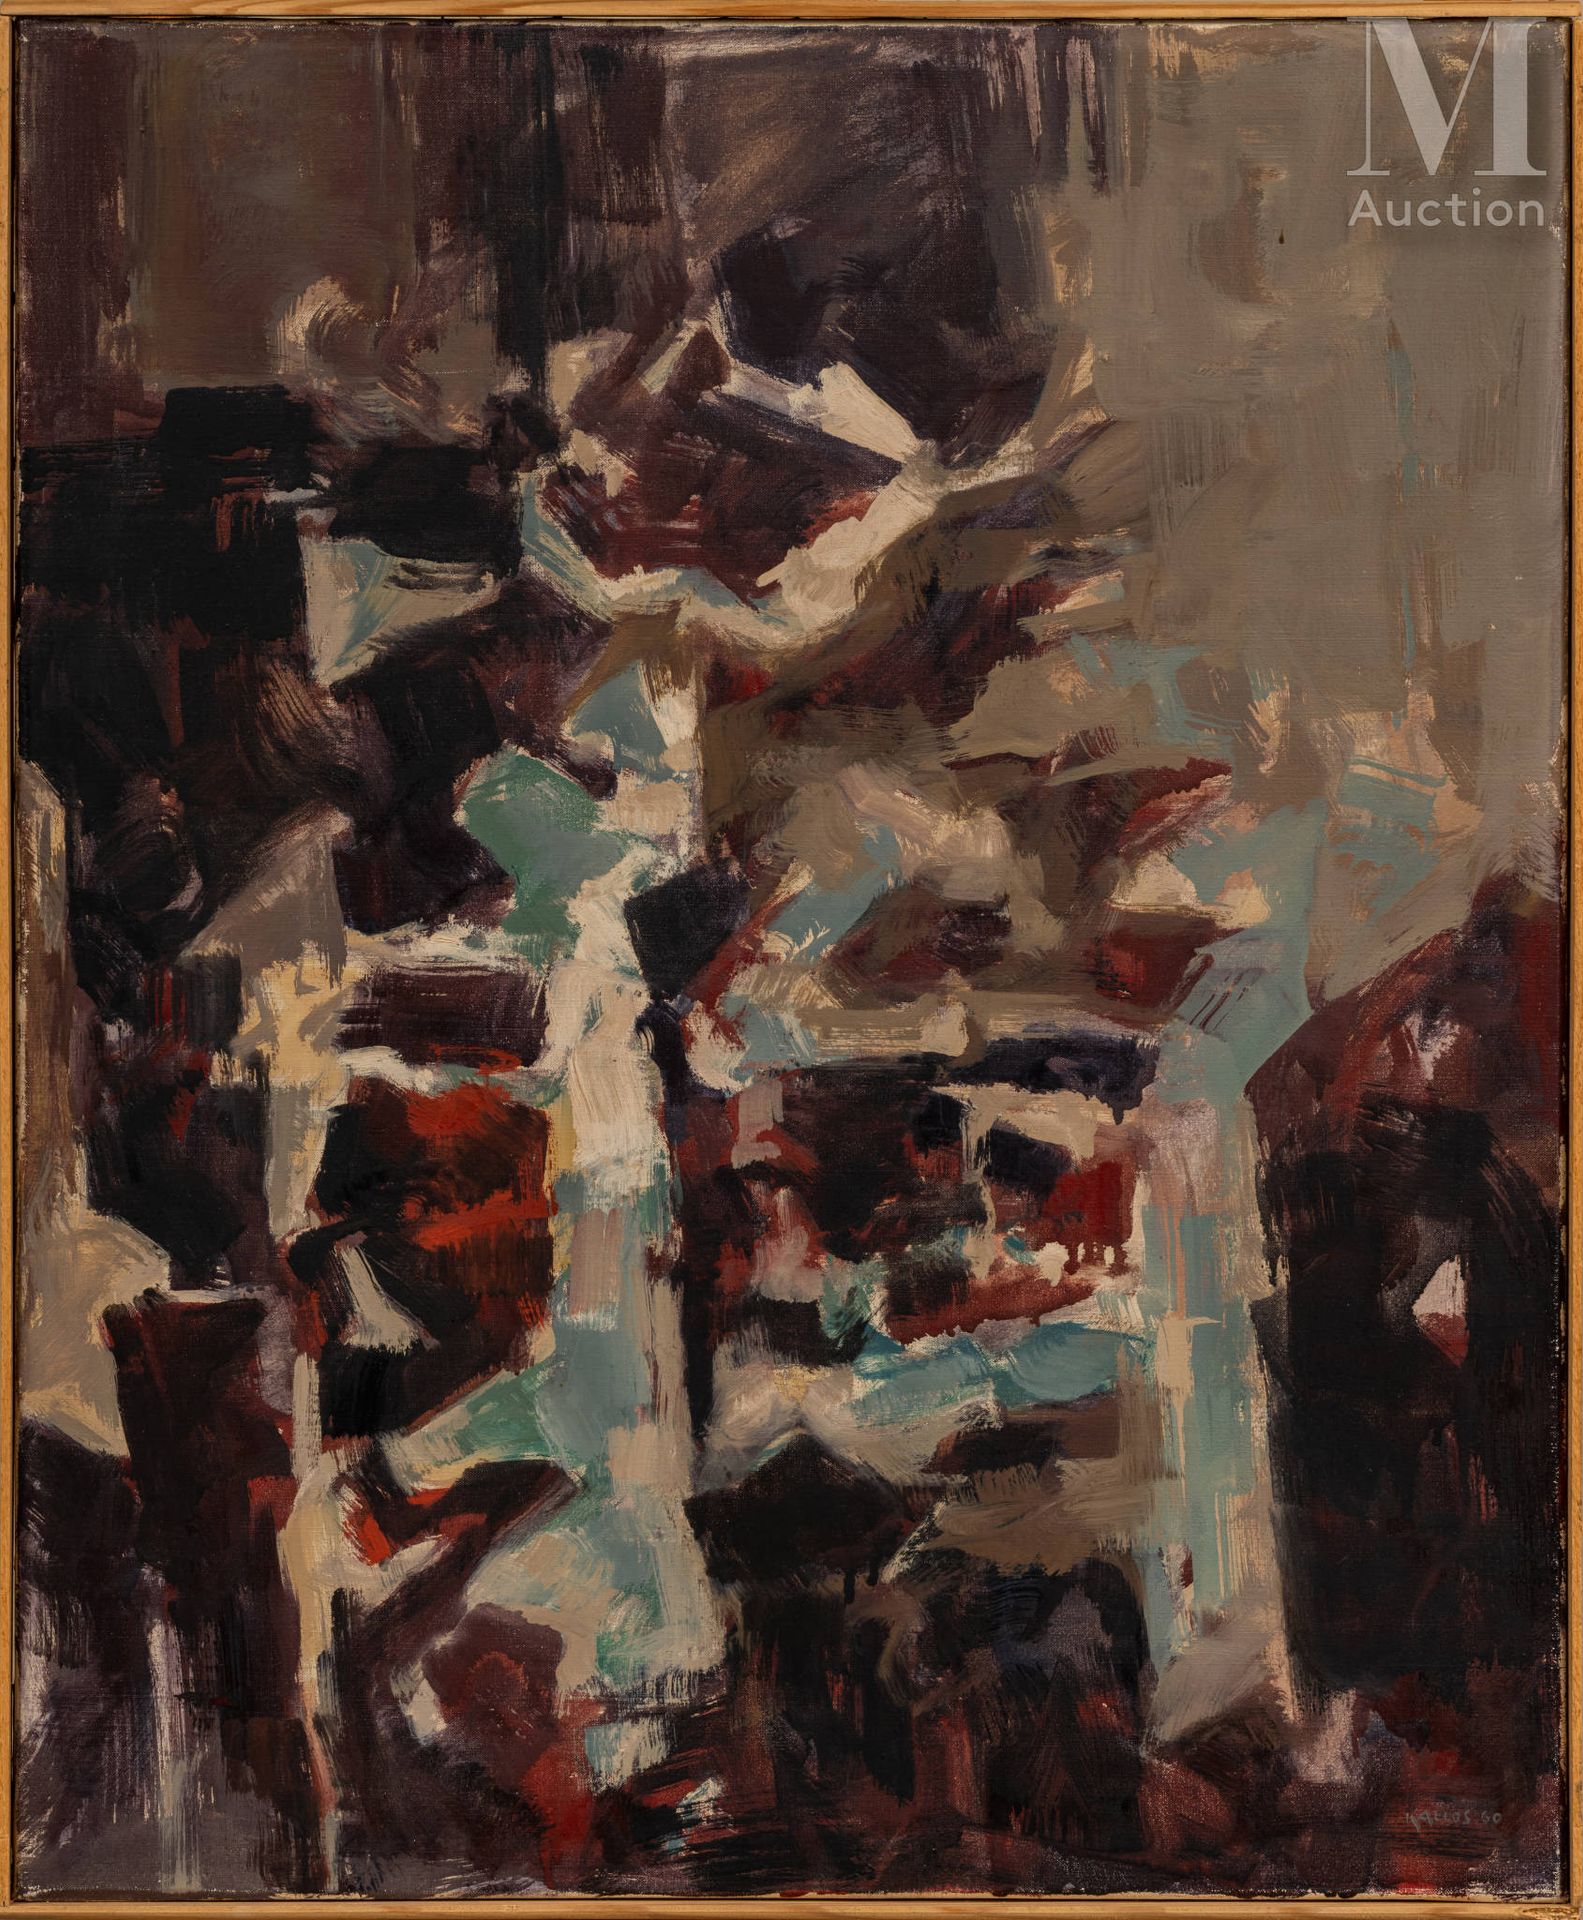 Paul Kallos (1928-2001) 构成, 1960年

布面油画，右下角有签名和日期

73 x 60厘米



出处 :

私人收藏，巴黎